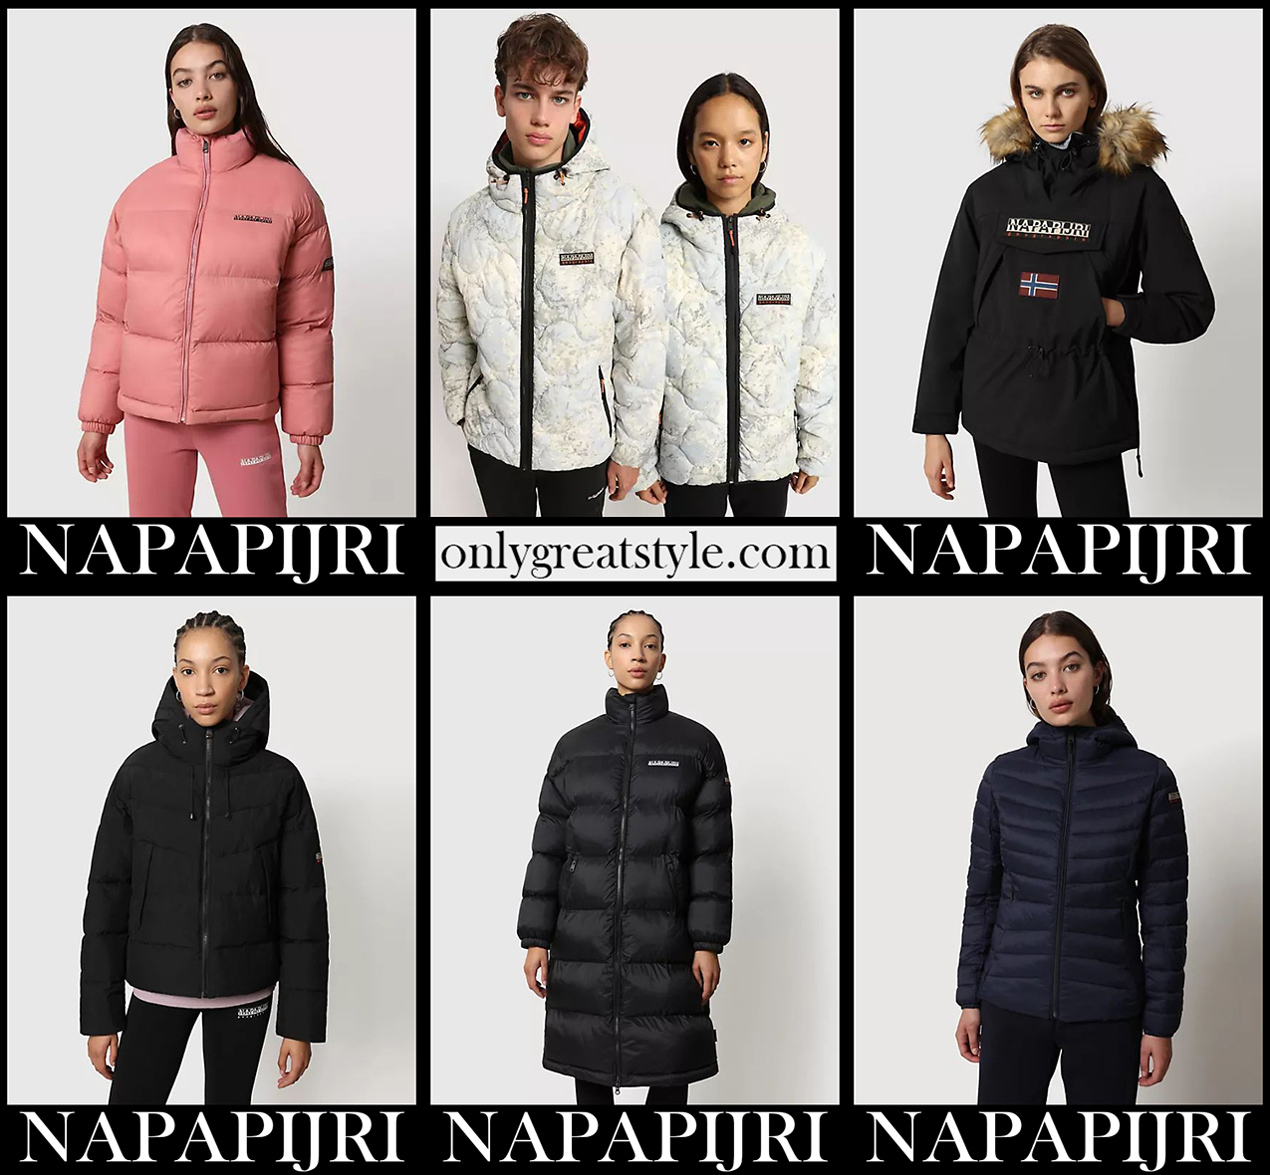 Napapijri jackets 2022 new arrivals womens clothing